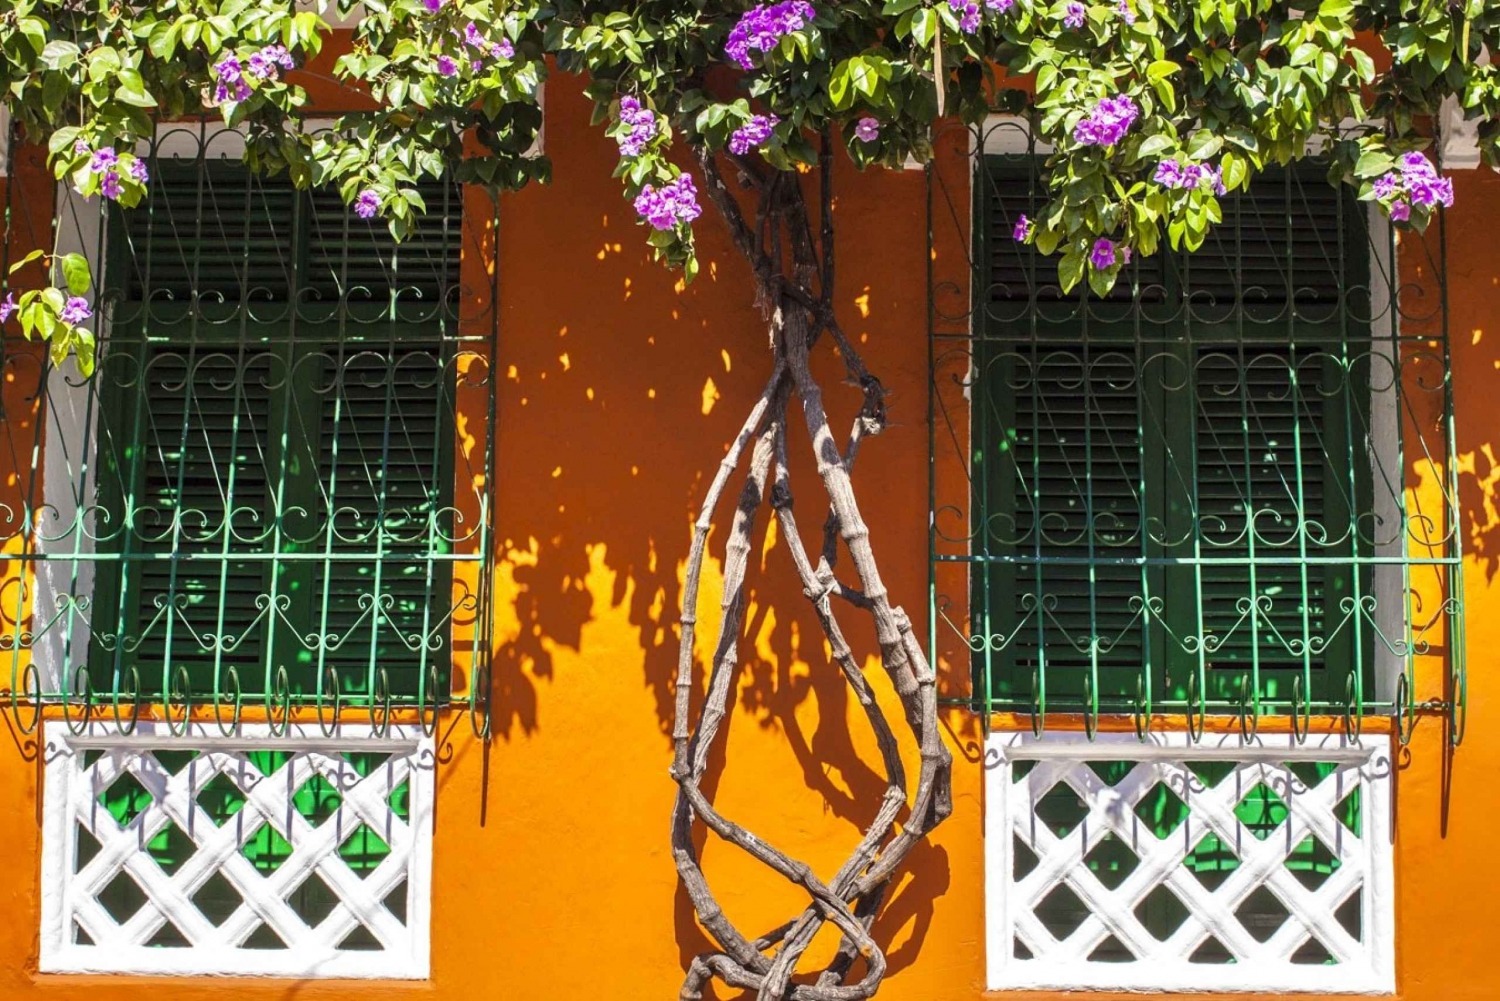 Cartagena Instagram Tour: Scenic and Trendy Shots